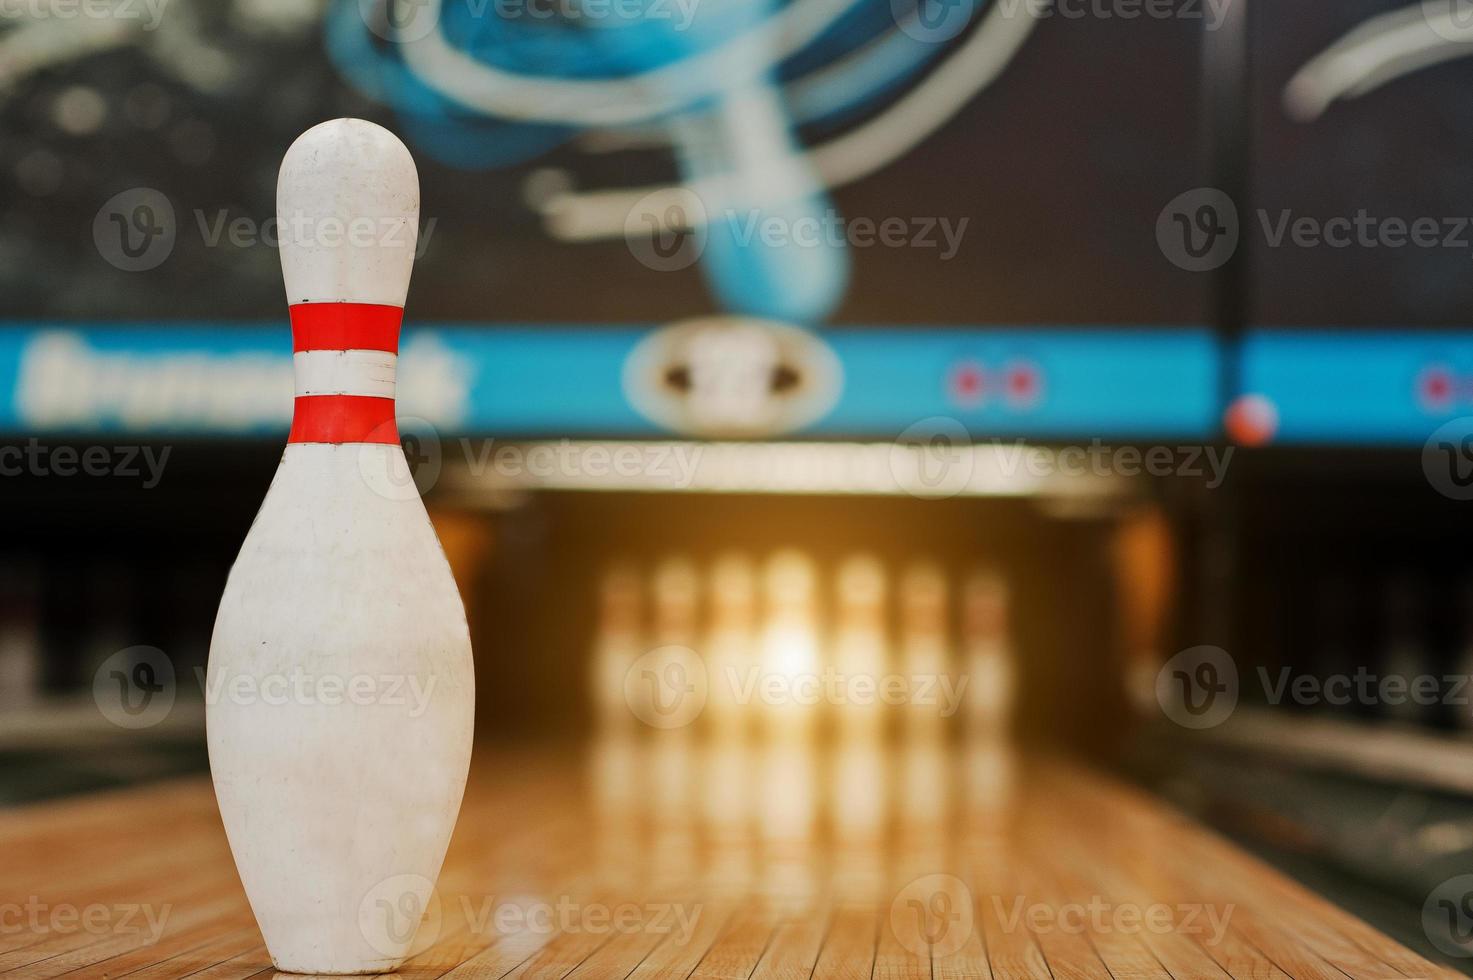 One bowling pin background bowling lane photo